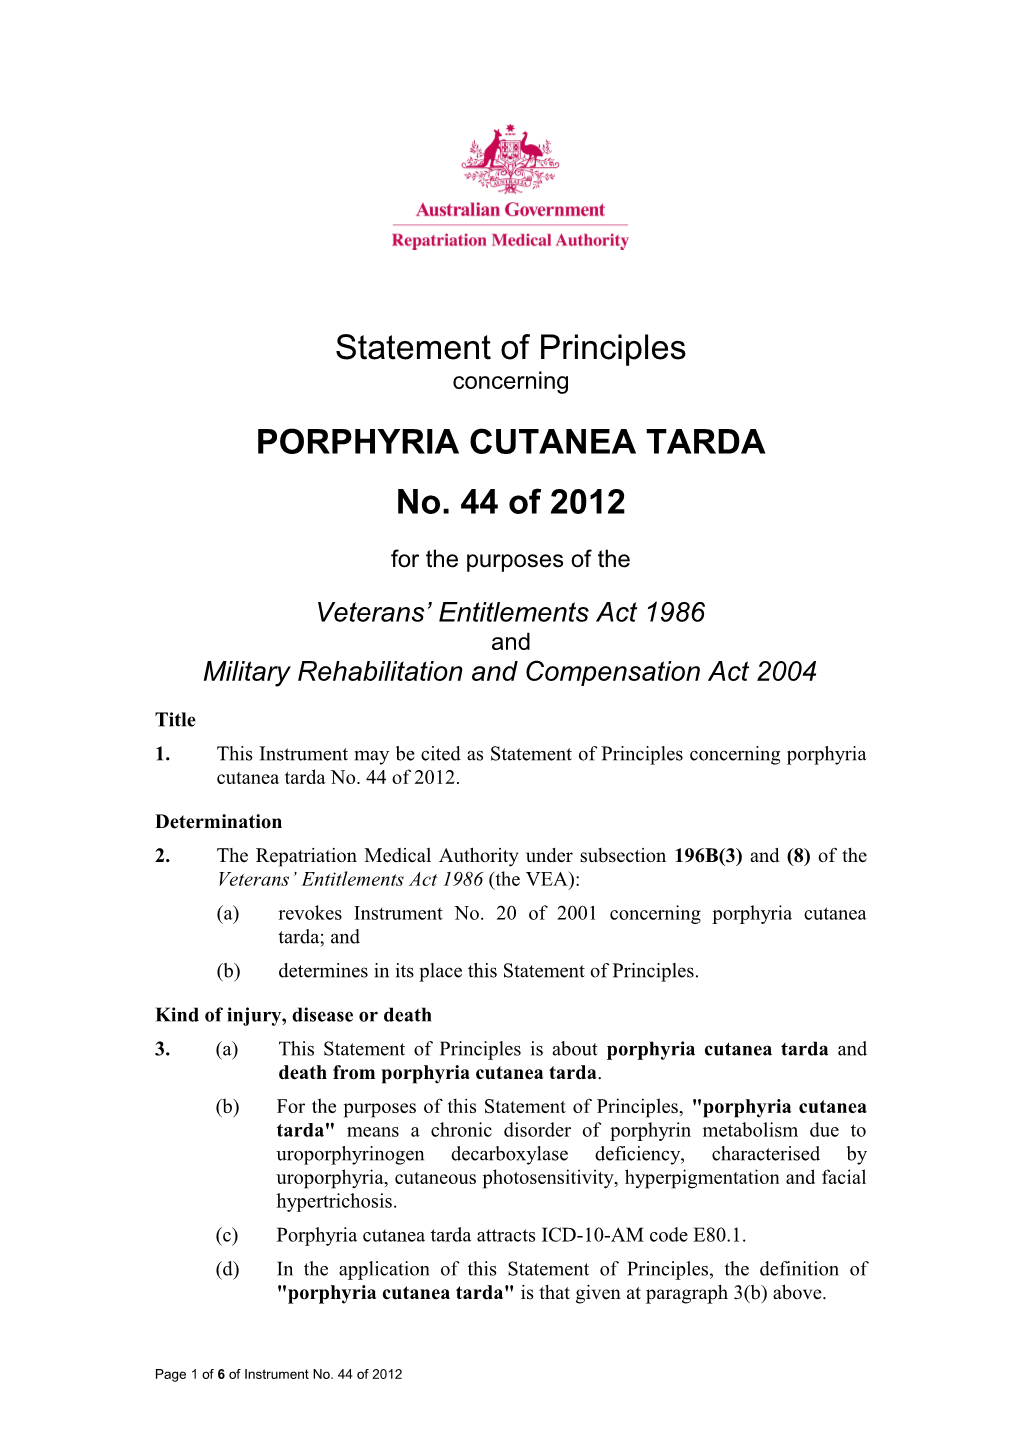 Statement of Principles 44 of 2012 Porphyria Cutanea Tarda Balance of Probabilities